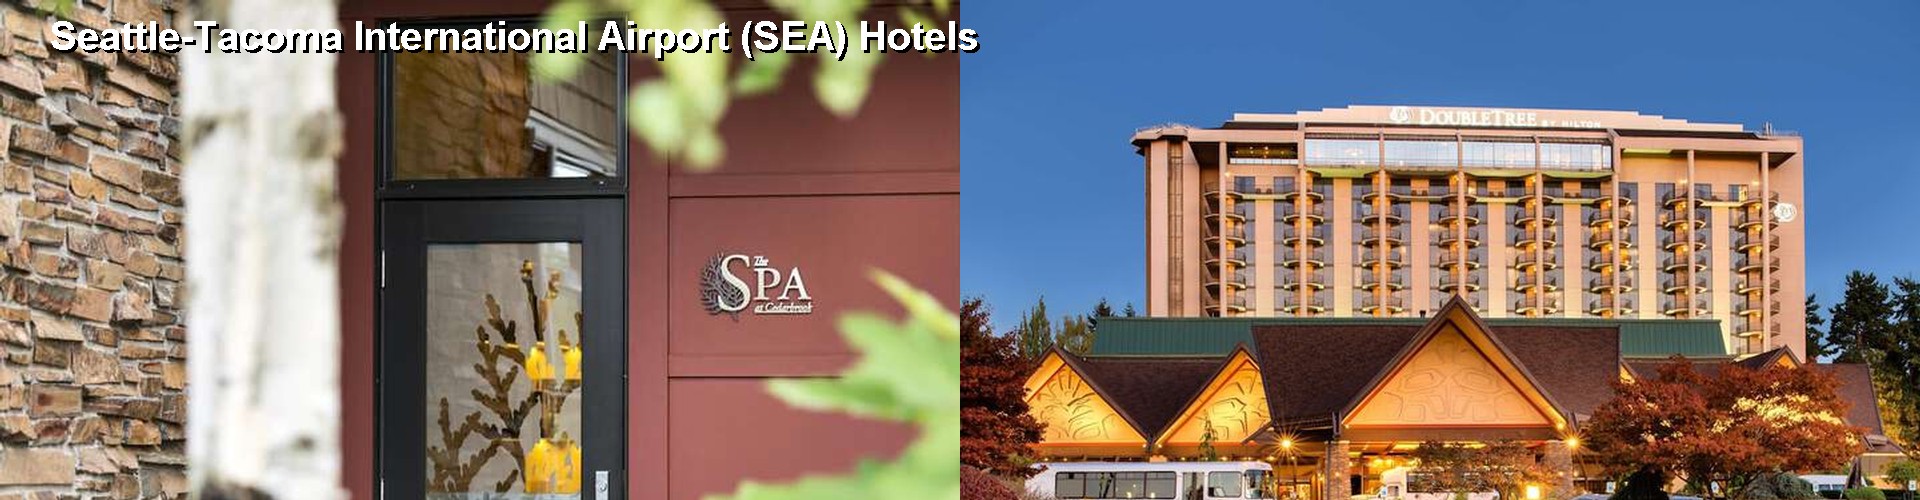 5 Best Hotels near Seattle-Tacoma International Airport (SEA)